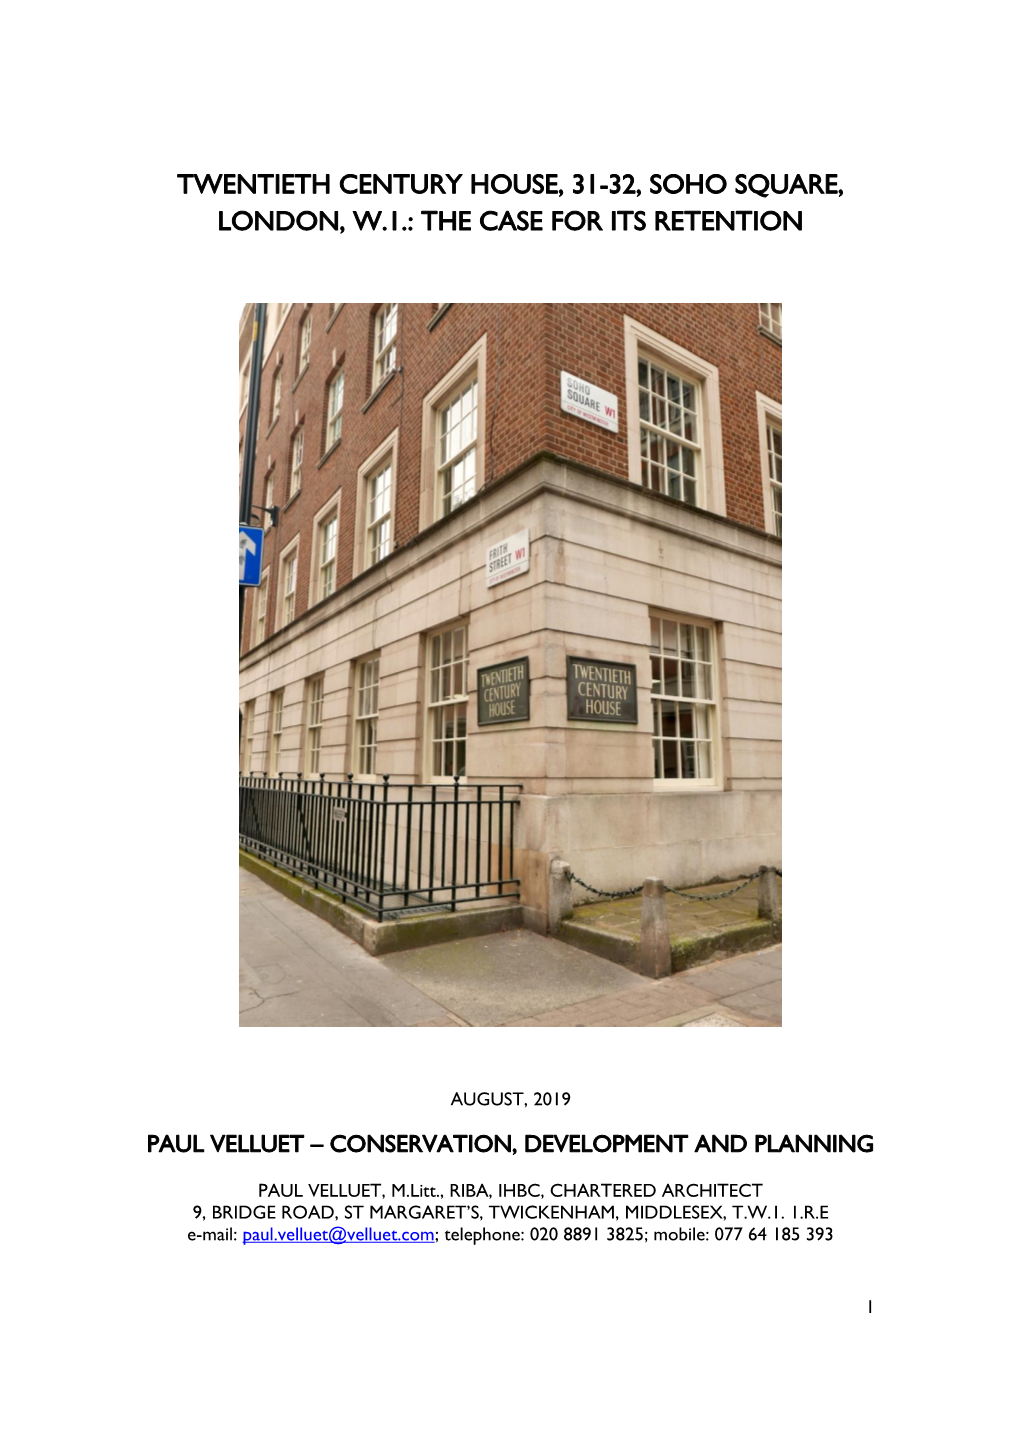 Twentieth Century House, 31-32, Soho Square, London, W.1.: the Case for Its Retention